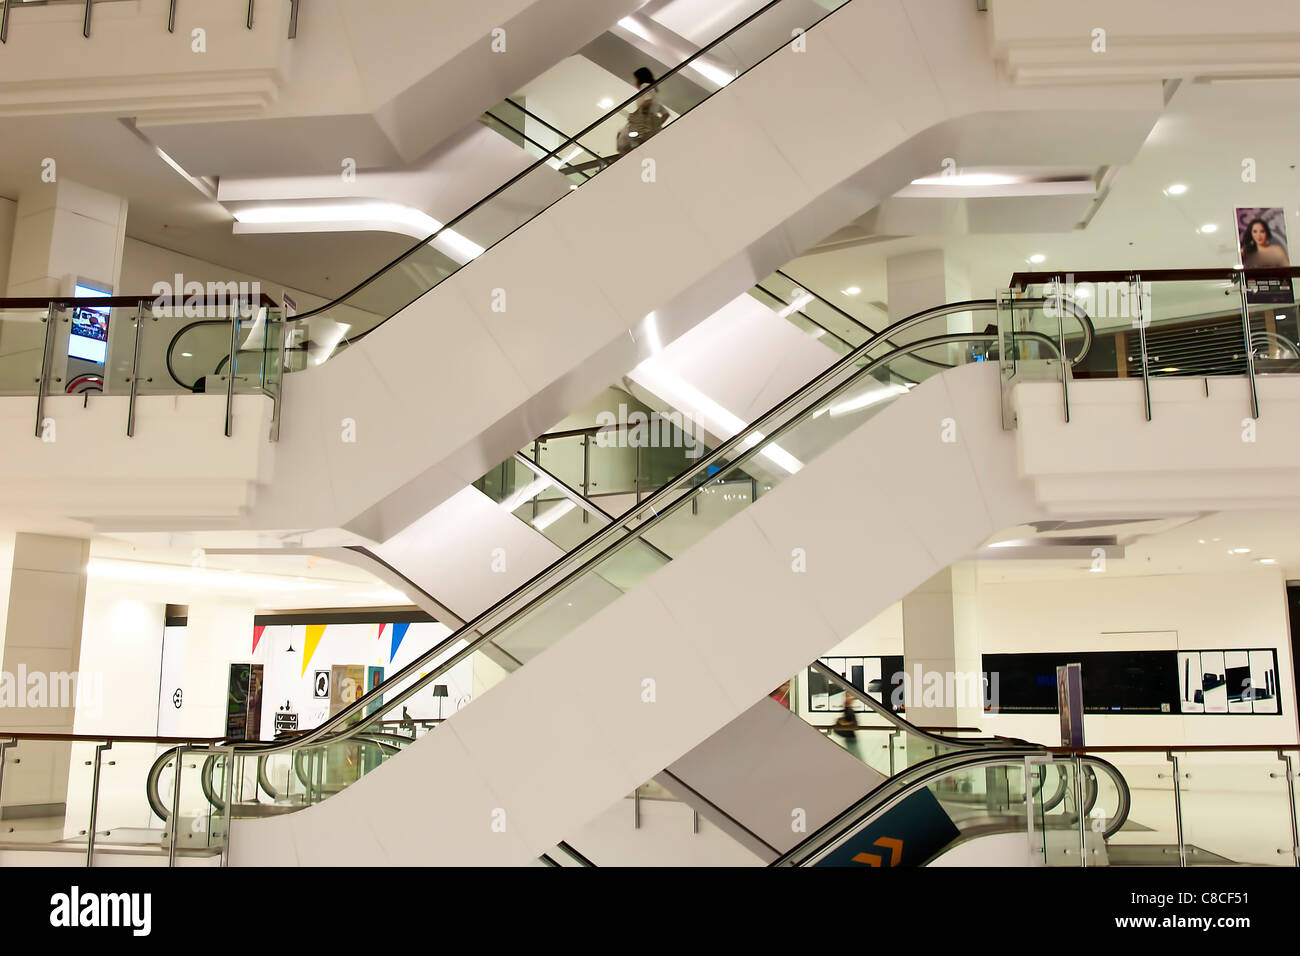 escalators at the shopping mall Stock Photo